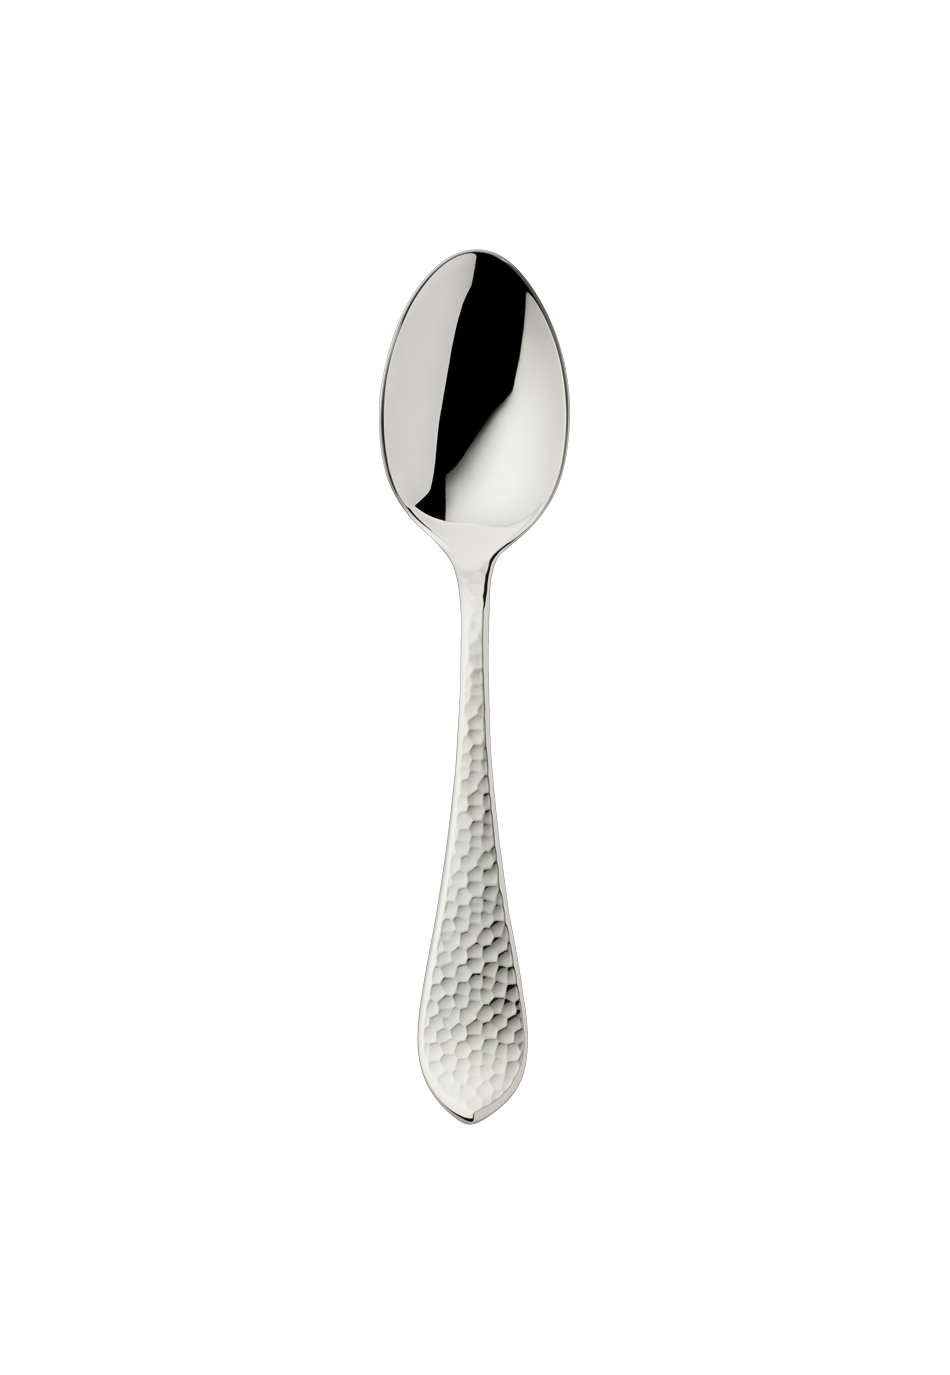 Martelé Dessert spoon (150g massive silverplated)